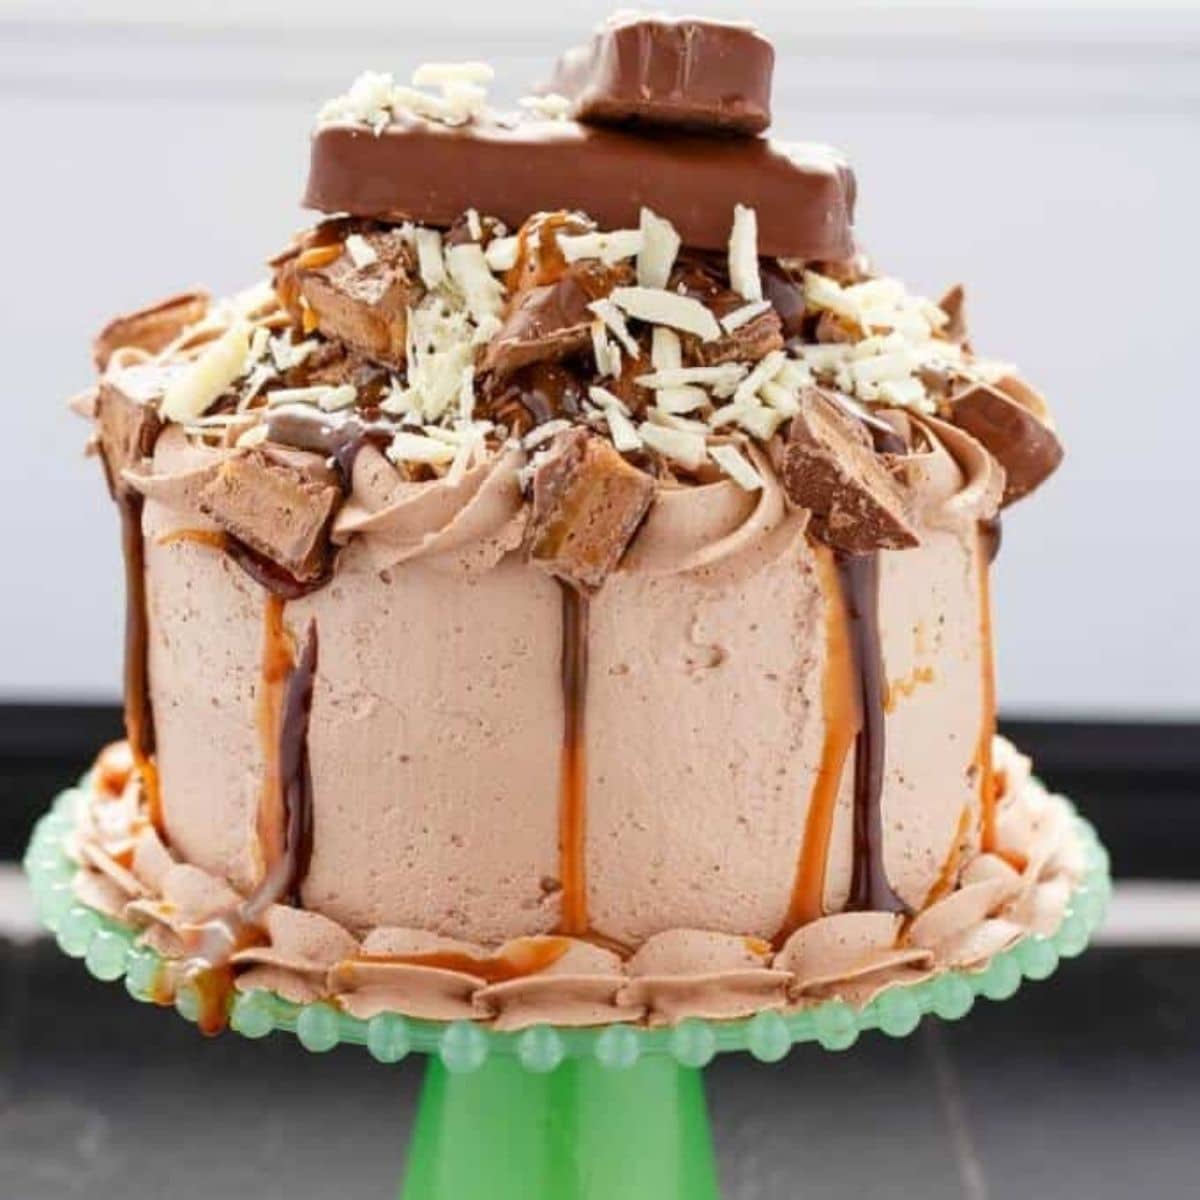 Giant Caramel Candy Bar Cake Recipe by Tasty